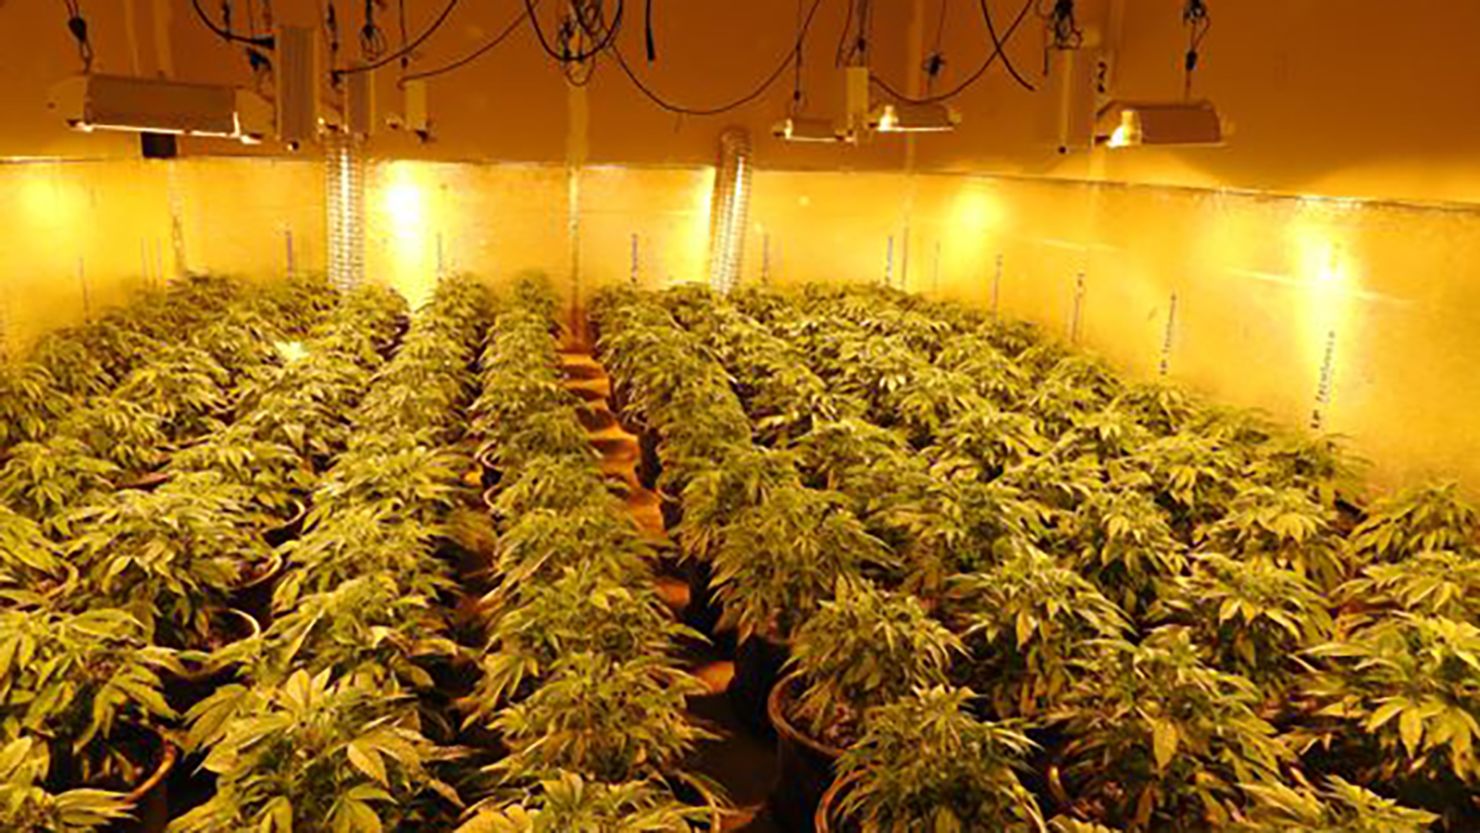 Authorities raided a marijuana grow house in West Point, California. 